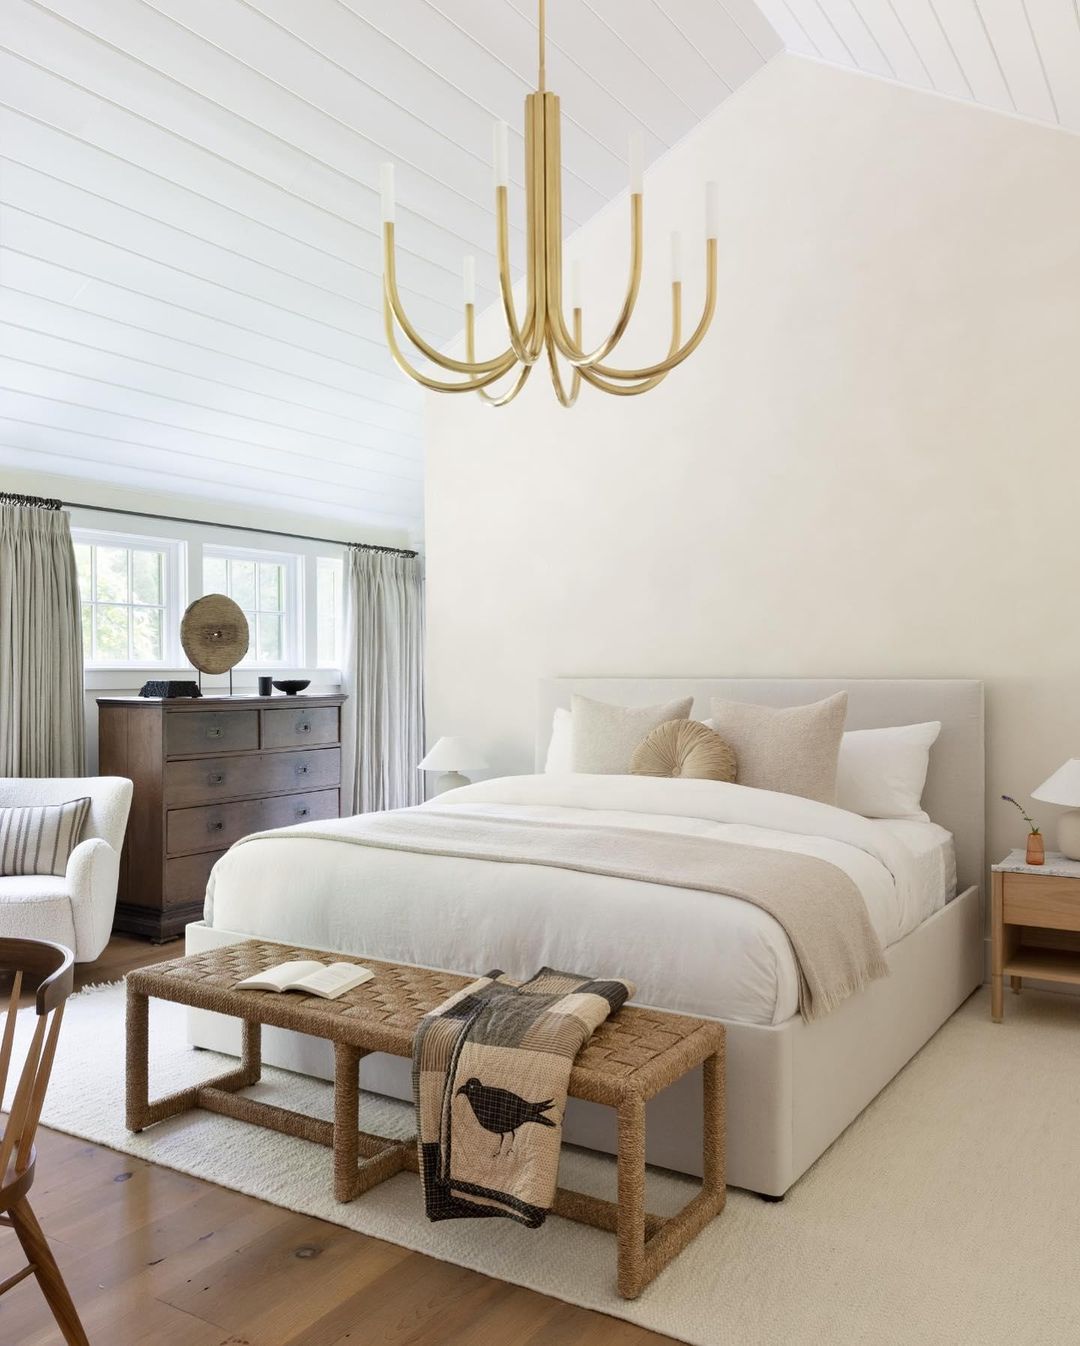 Rustic Chic Meets Modern Simplicity Bedroom Remodel